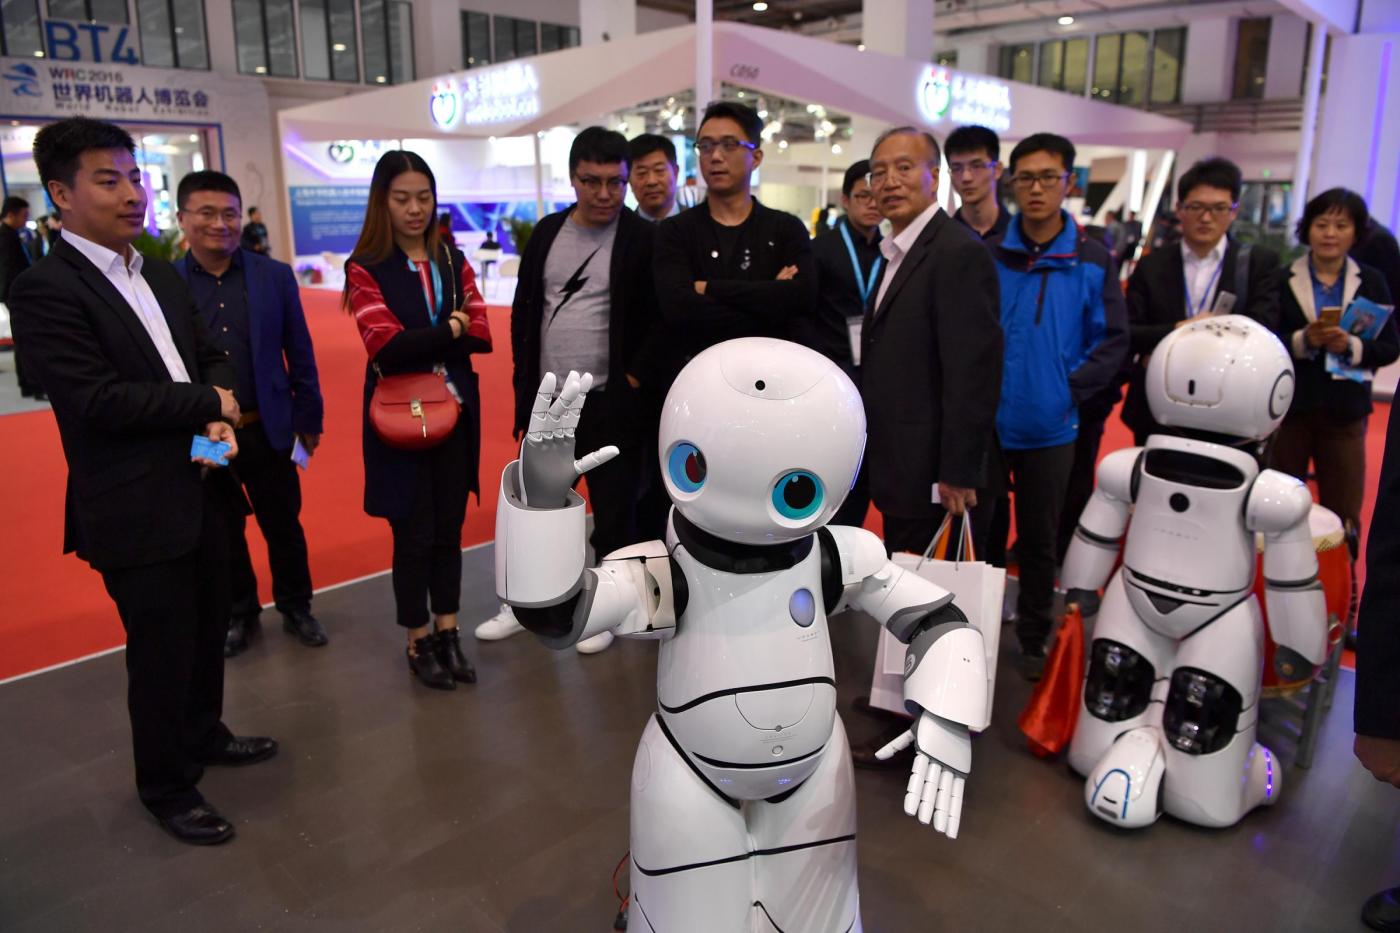 Конференции робототехника. Роботы в Японии. Робототехника Японии. Китайские роботы. Выставка роботов в Японии.